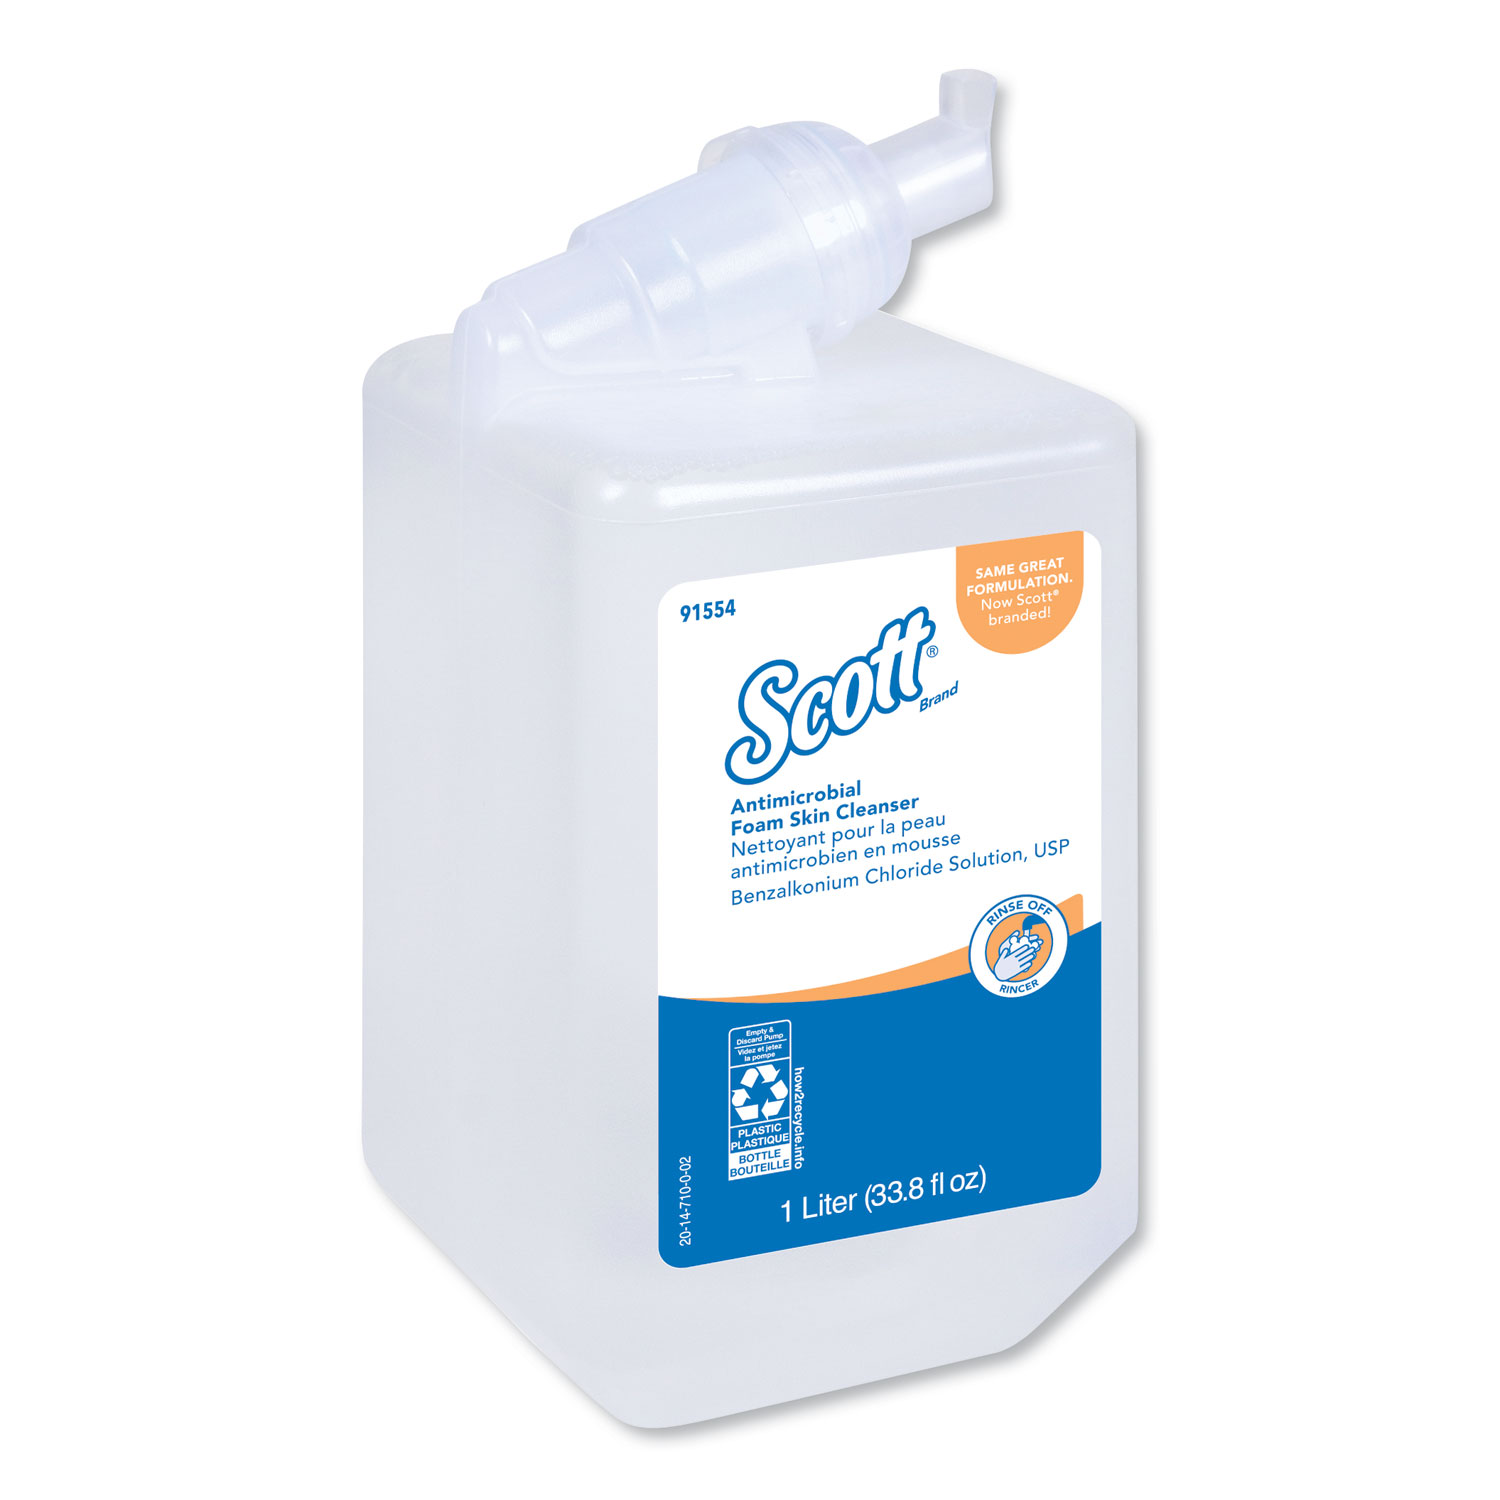  Scott KCC 91554 Control Antimicrobial Foam Skin Cleanser, Fresh Scent, 1000mL Bottle, 6/CT (KCC91554CT) 